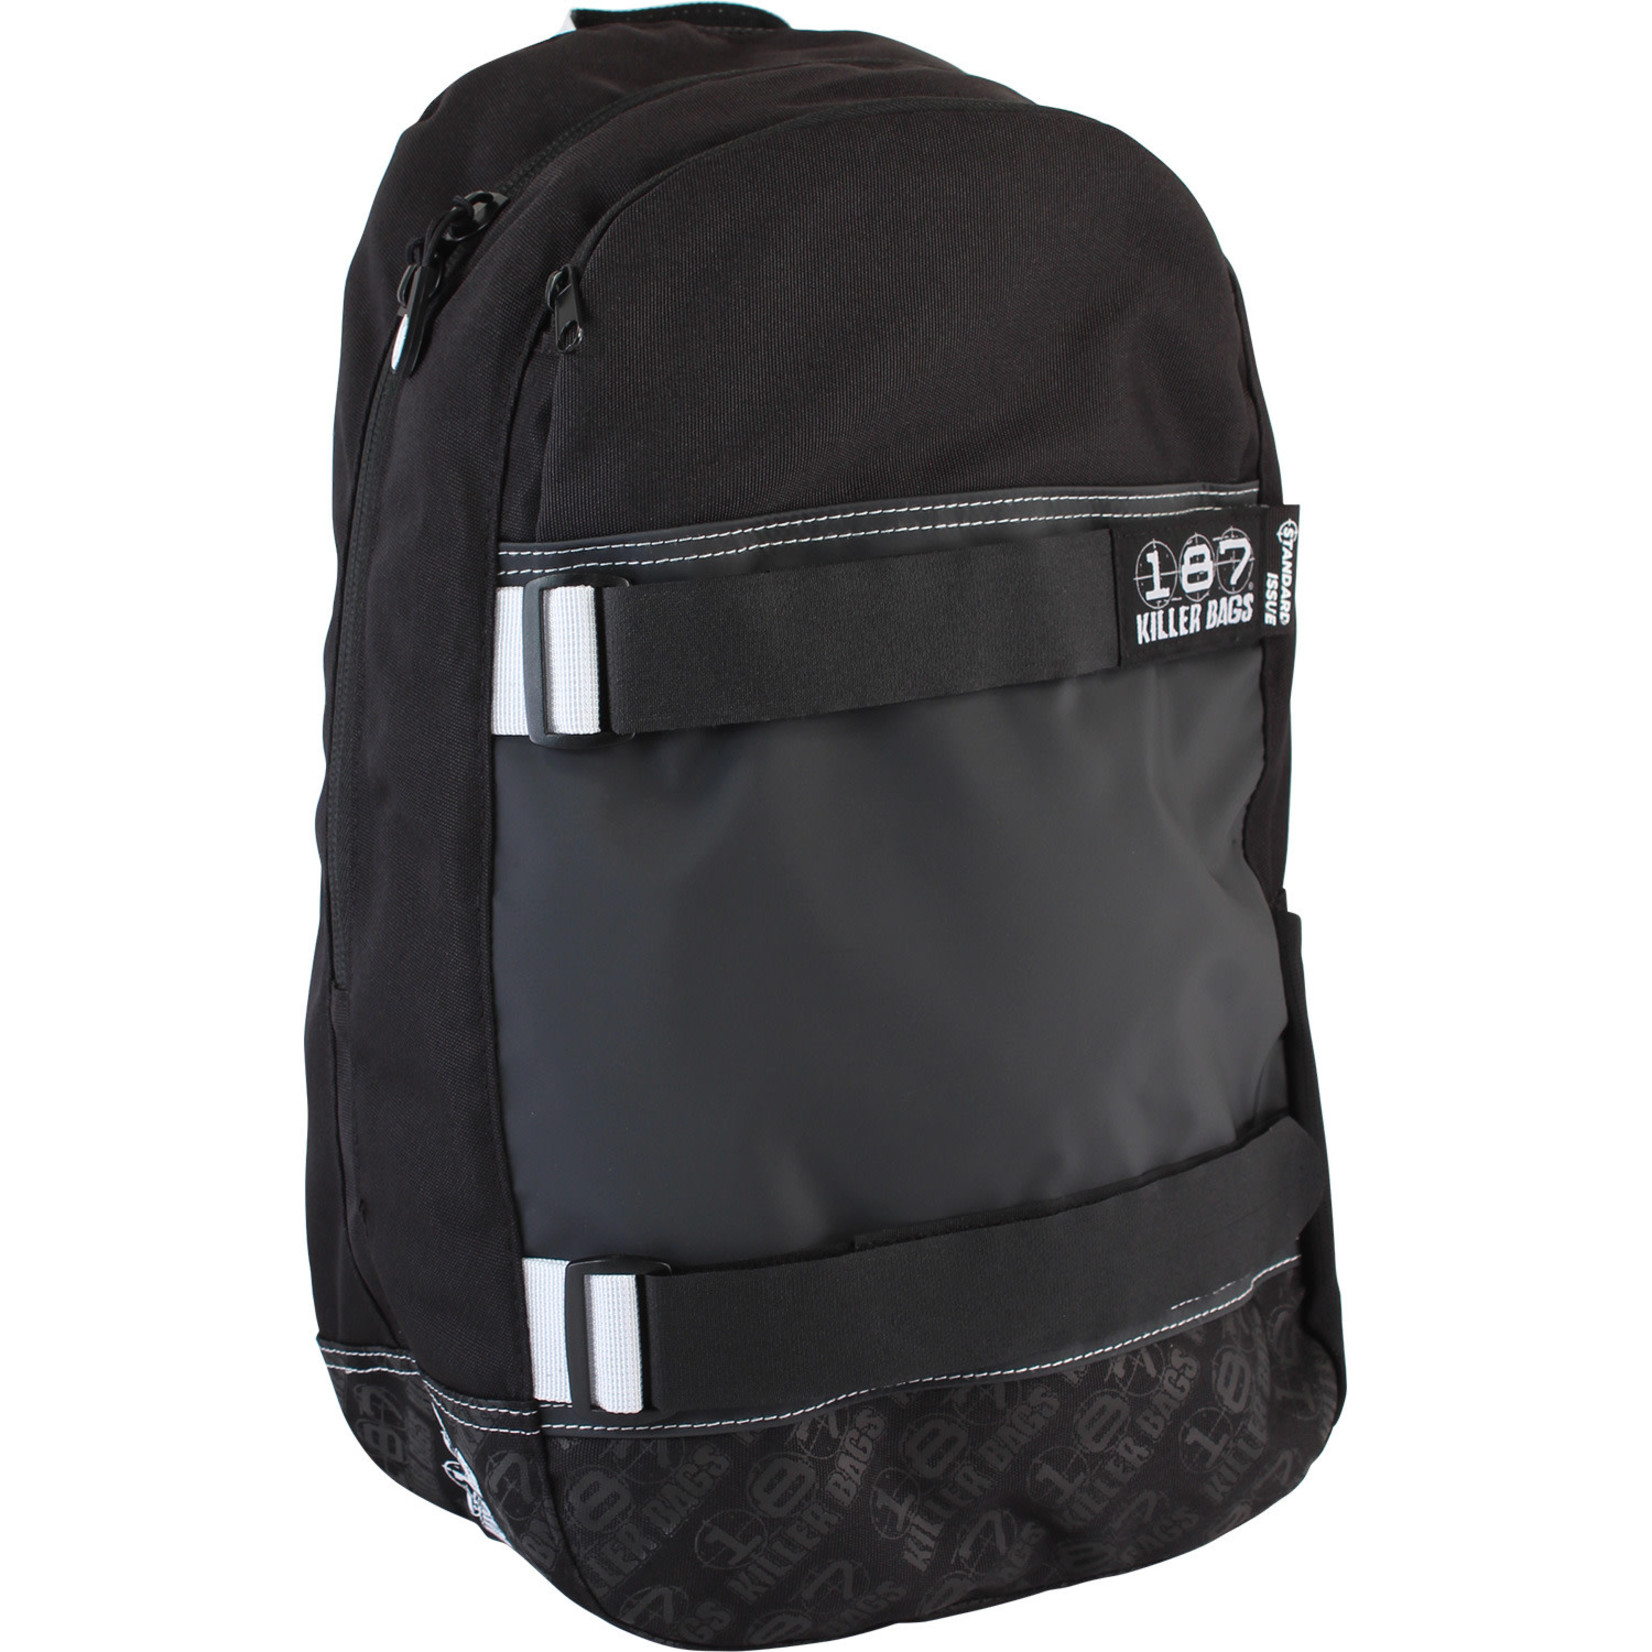 187 Killer Pads 187 Standard Issue Backpack - Black